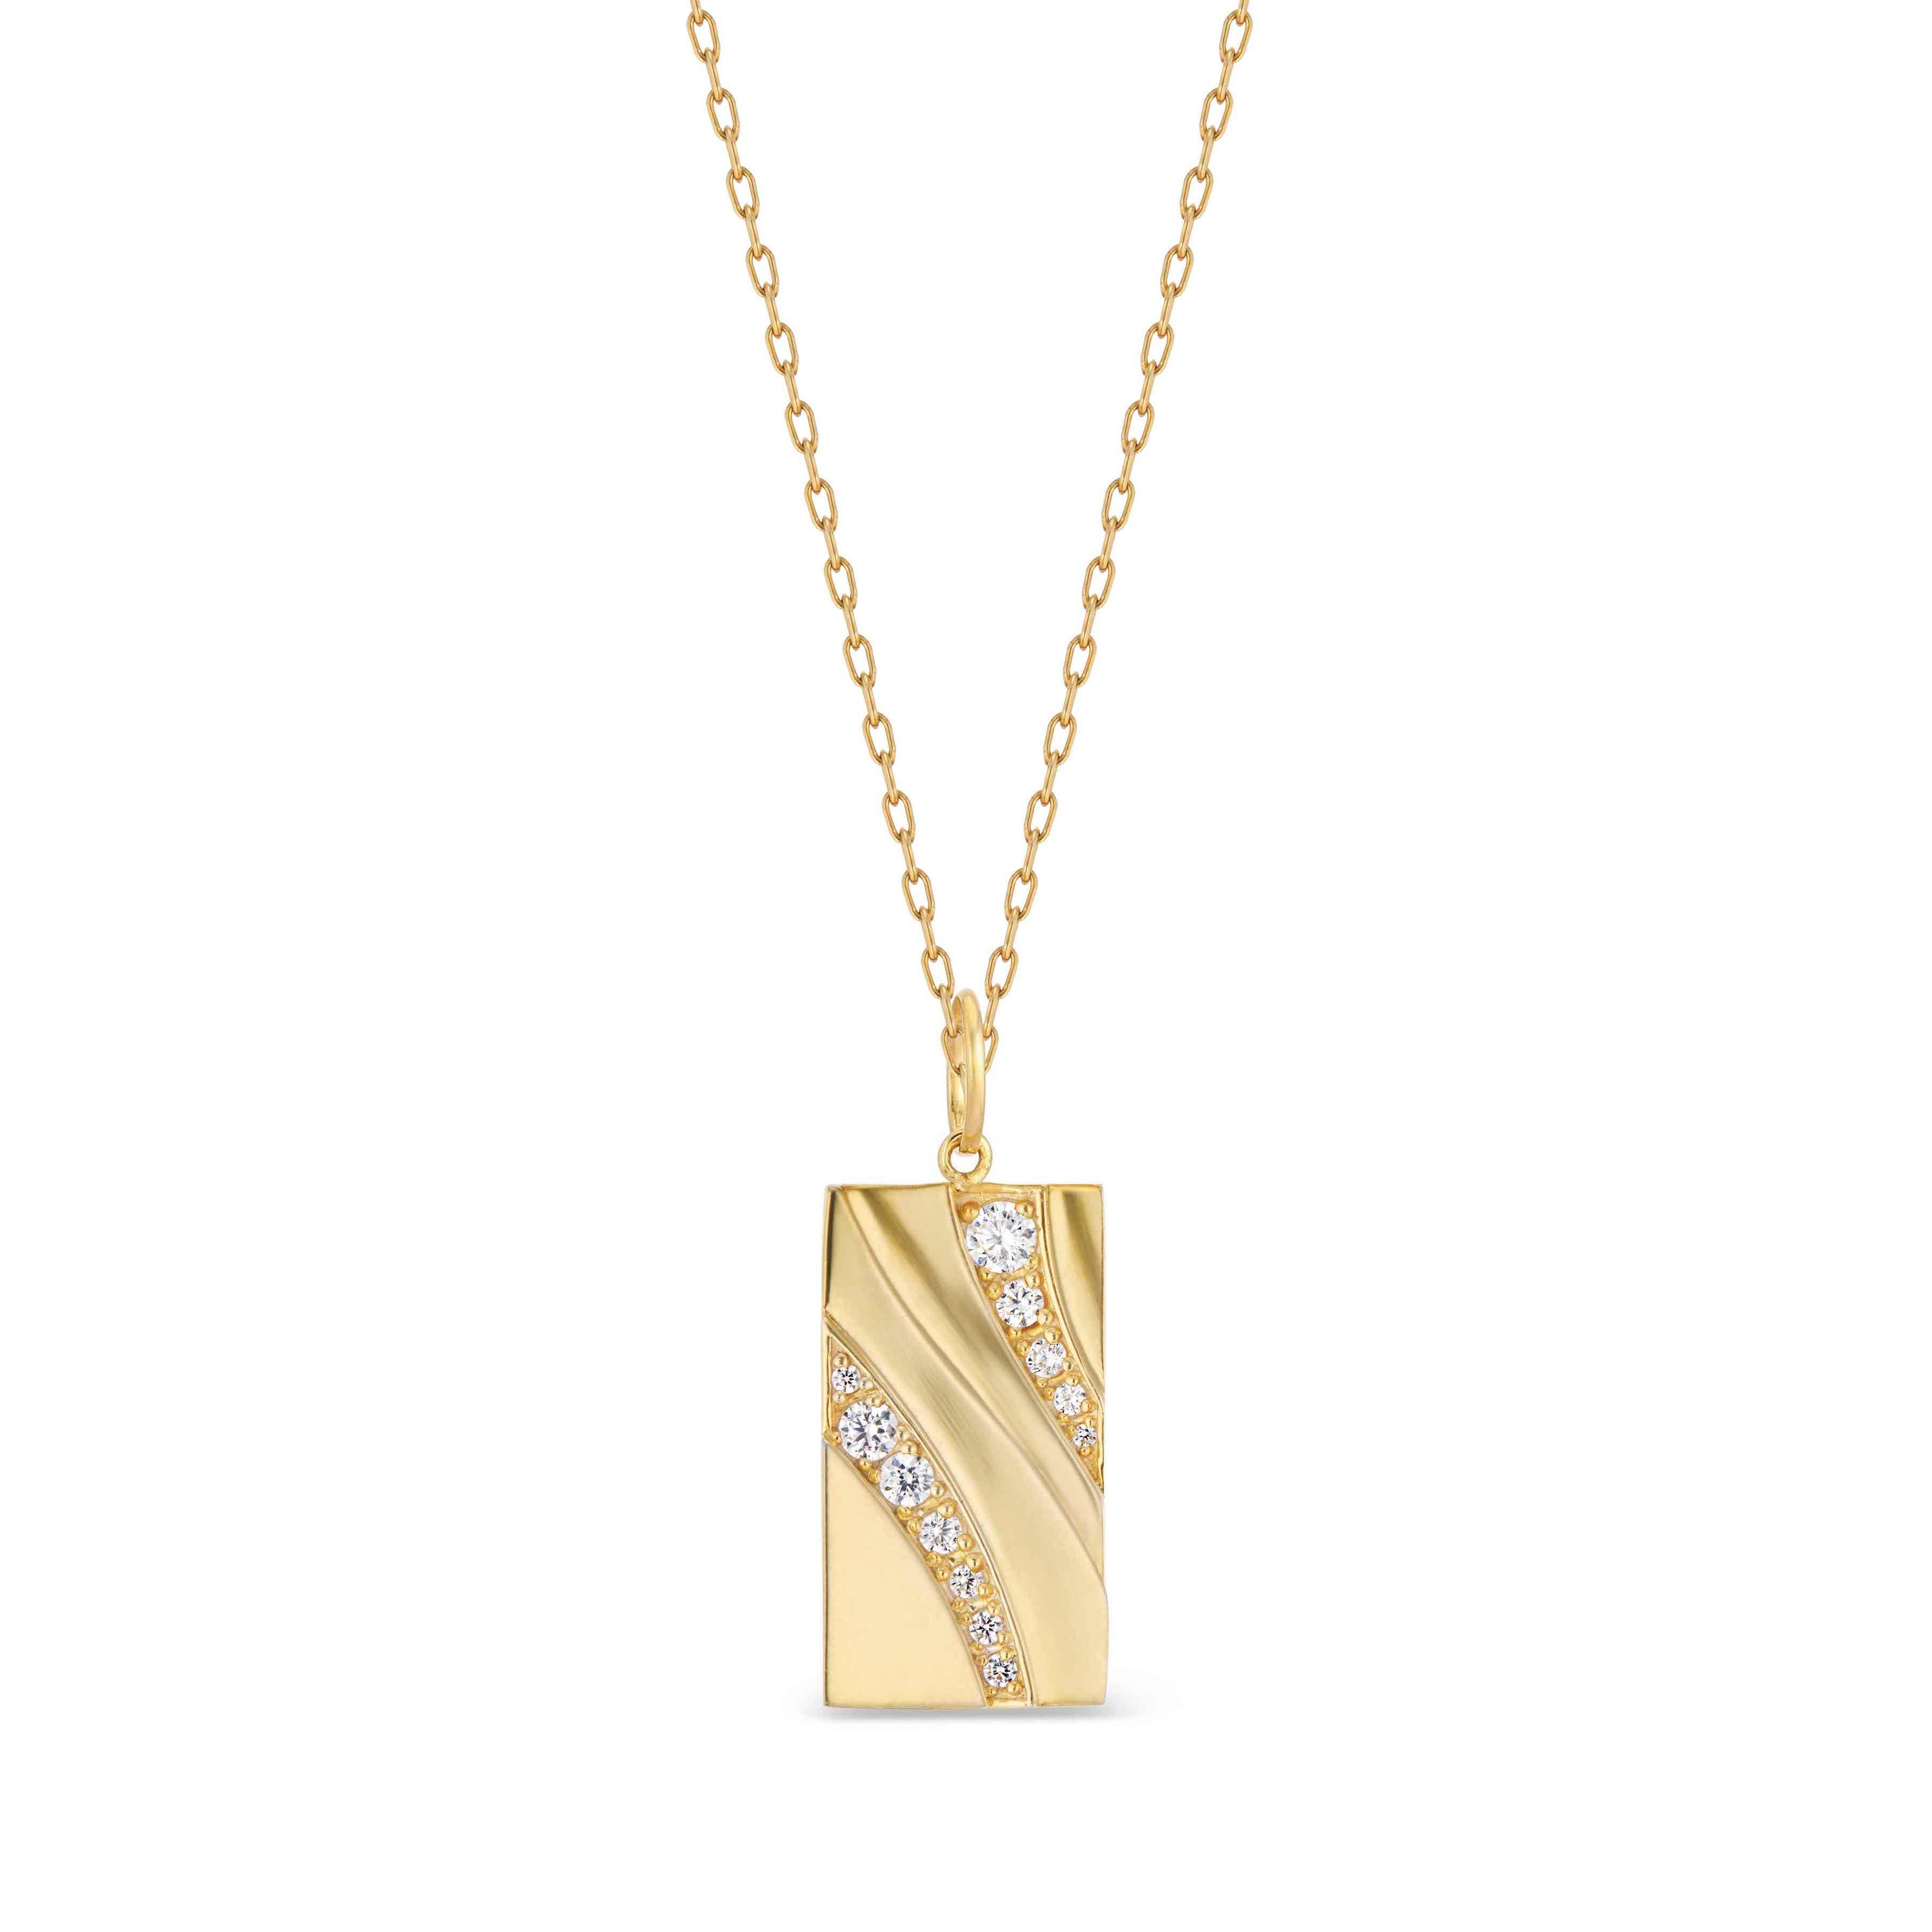 Contemporary Casey Perez Sculptural 14k gold diamond rectangular pendant with wave detail For Sale